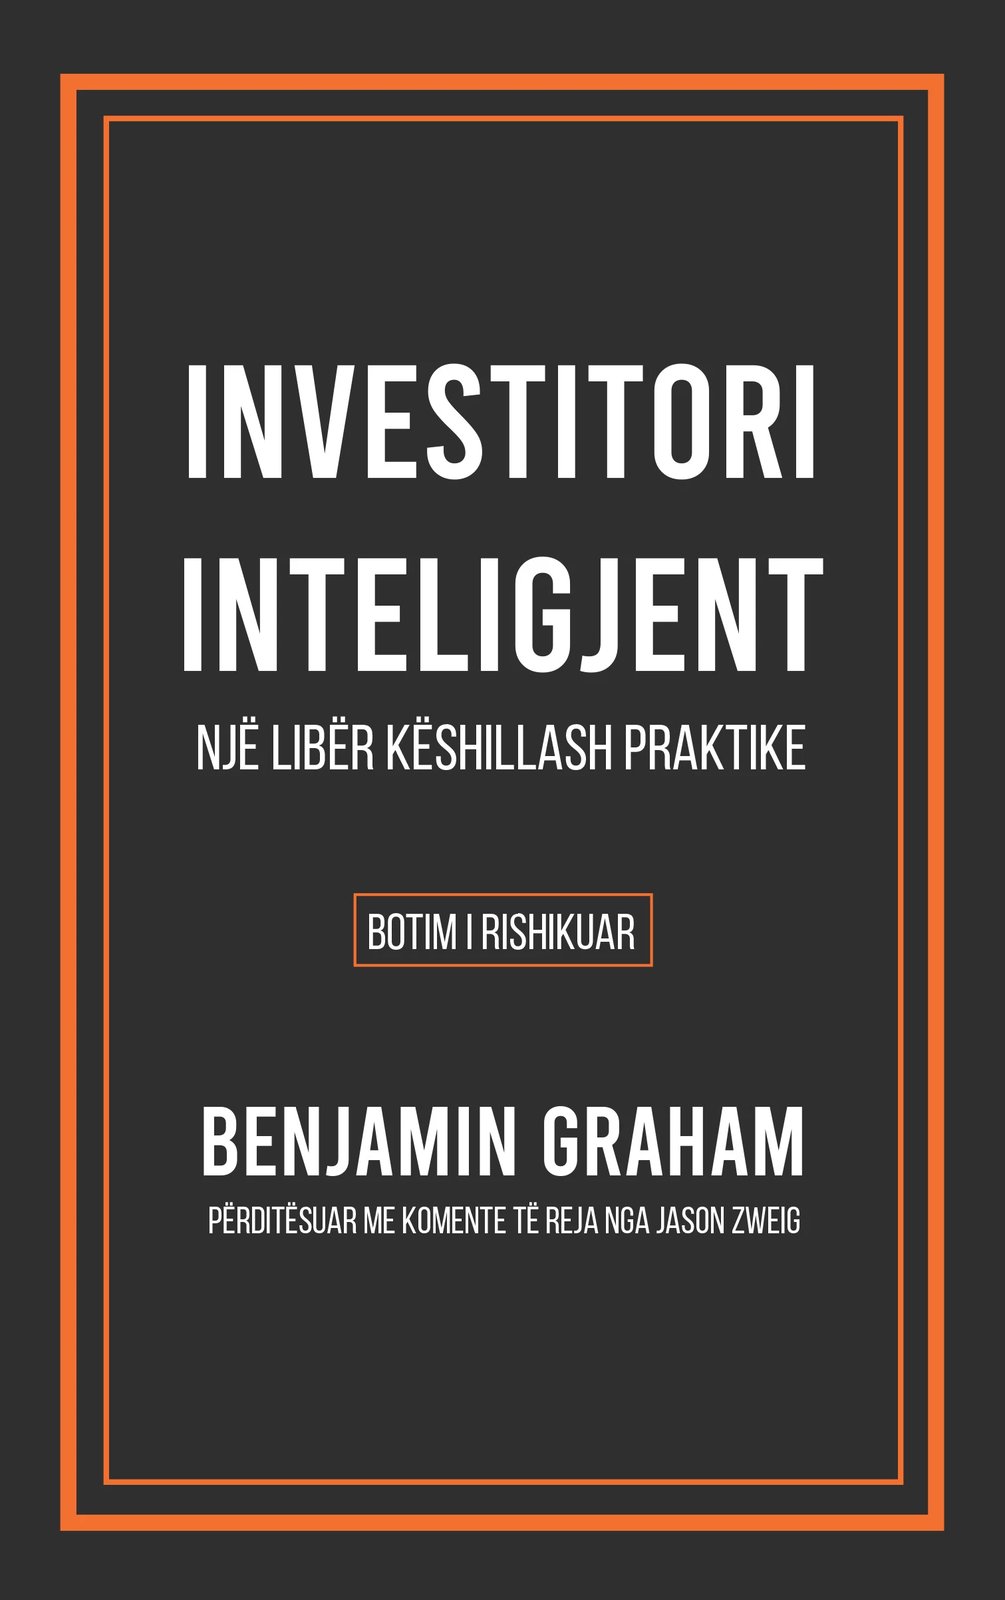 Investitori intelegjent, autori Benjamin Graham